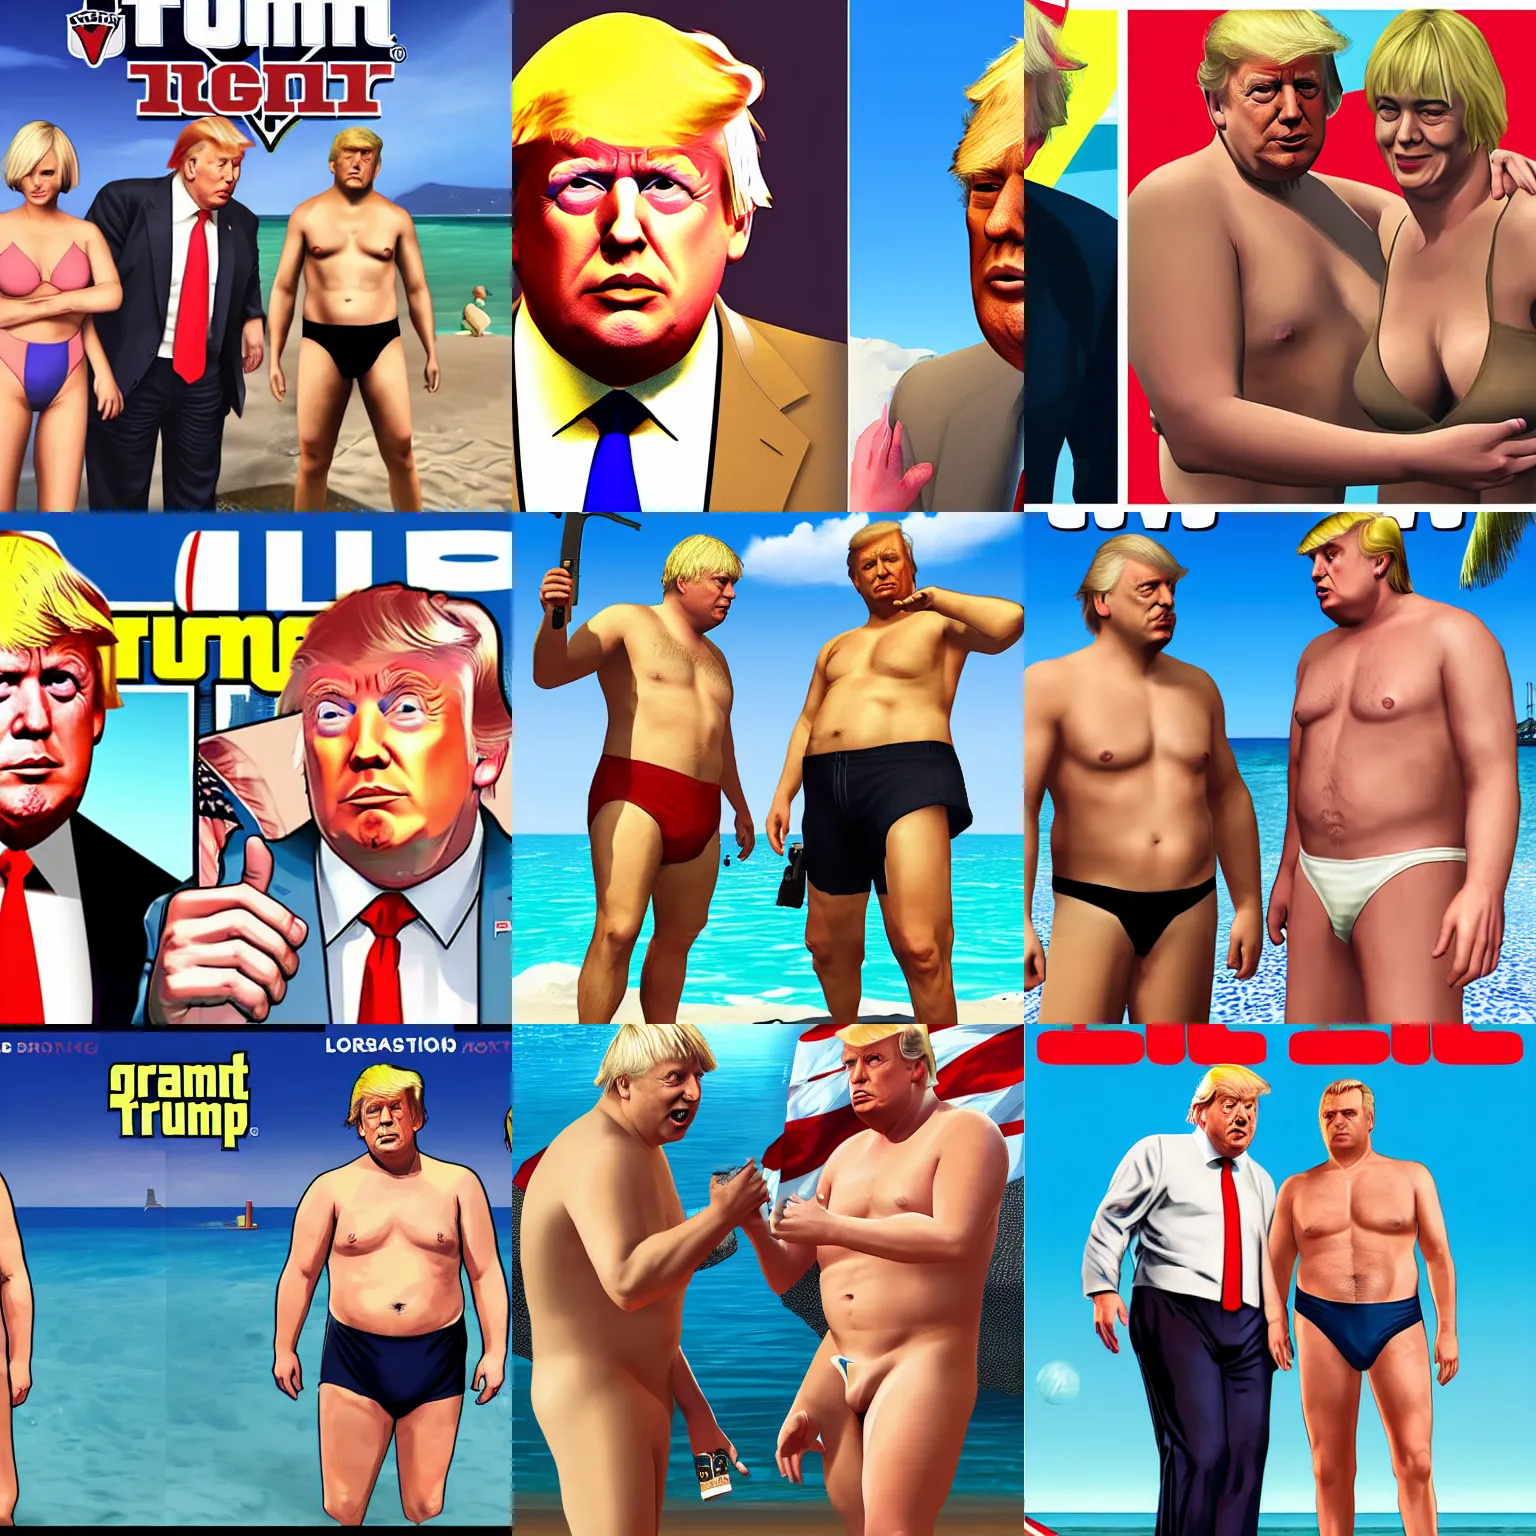 Prompt: boris johnson and trump in bathing suits GTA V box art